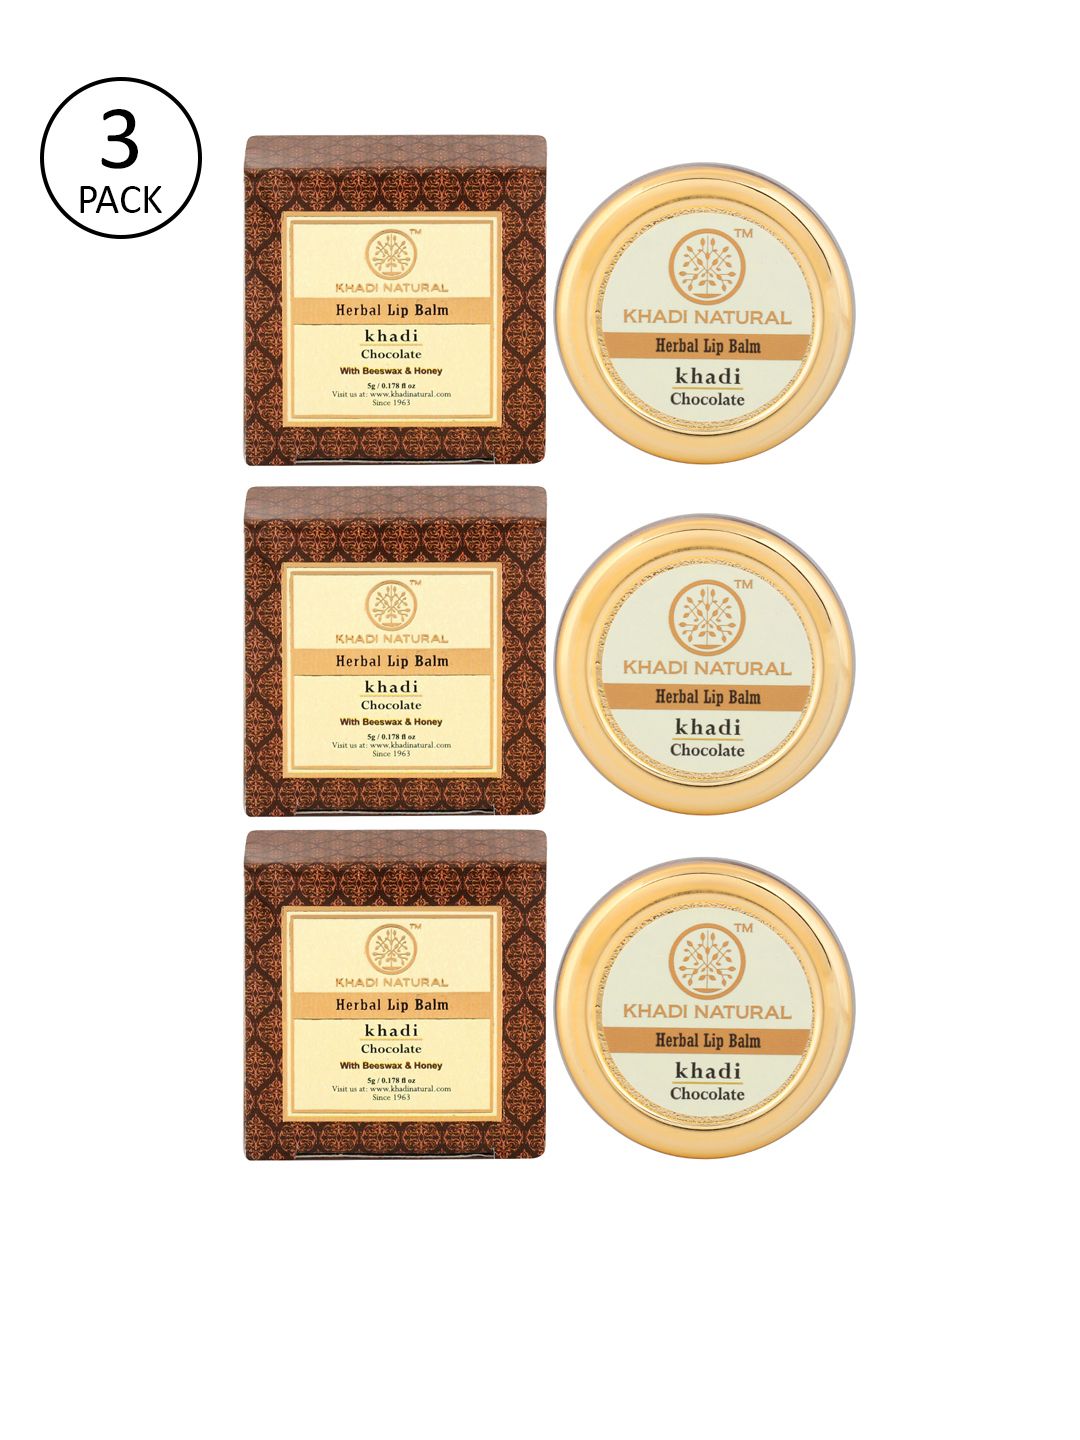 Khadi Natural Set of 3 Chocolate Herbal Lip Balm With Beeeswax & Honey Price in India